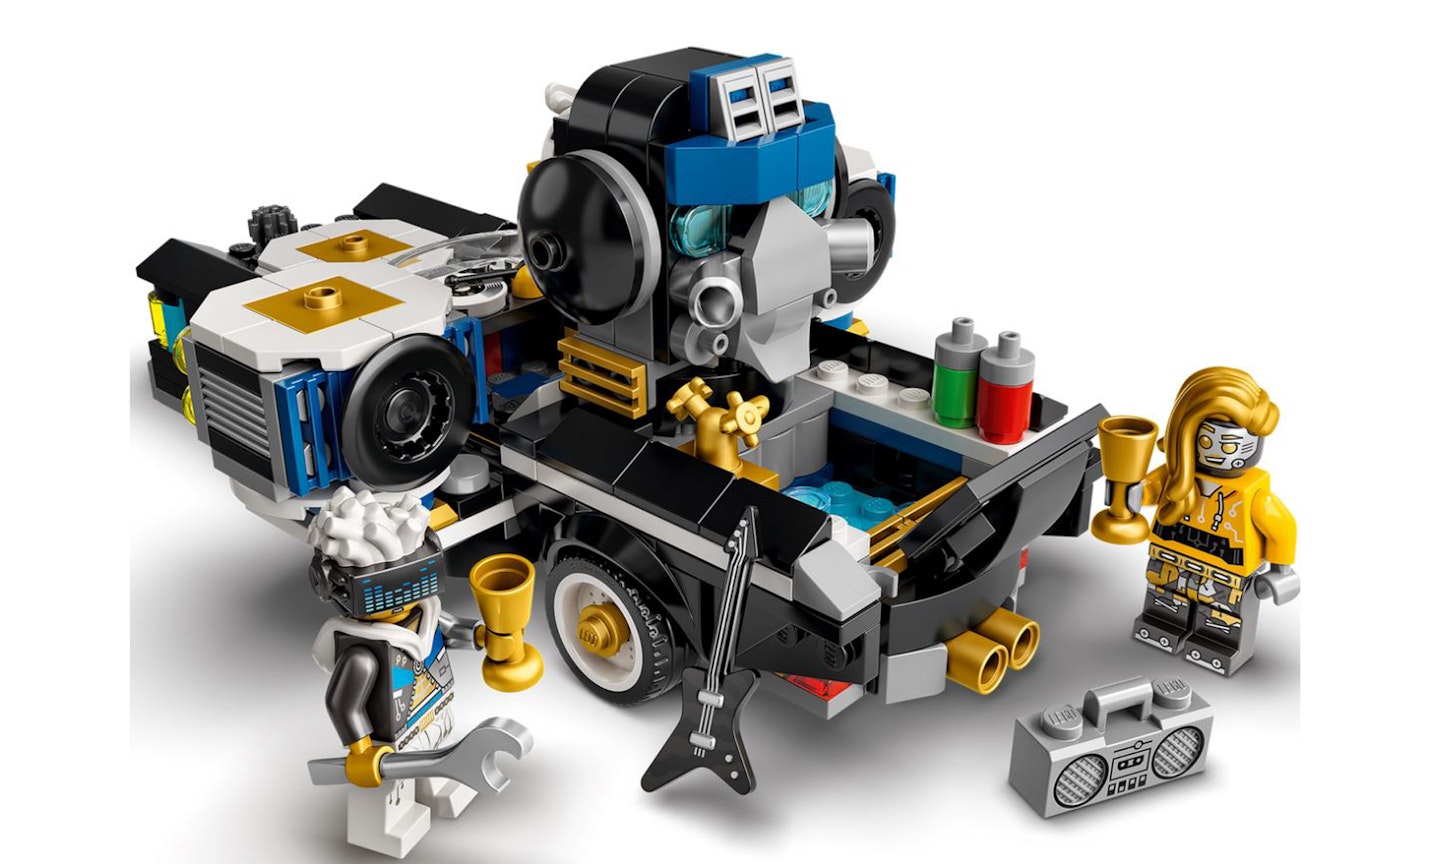 Lego Vidiyo Robo HipHop Car and Bandmates